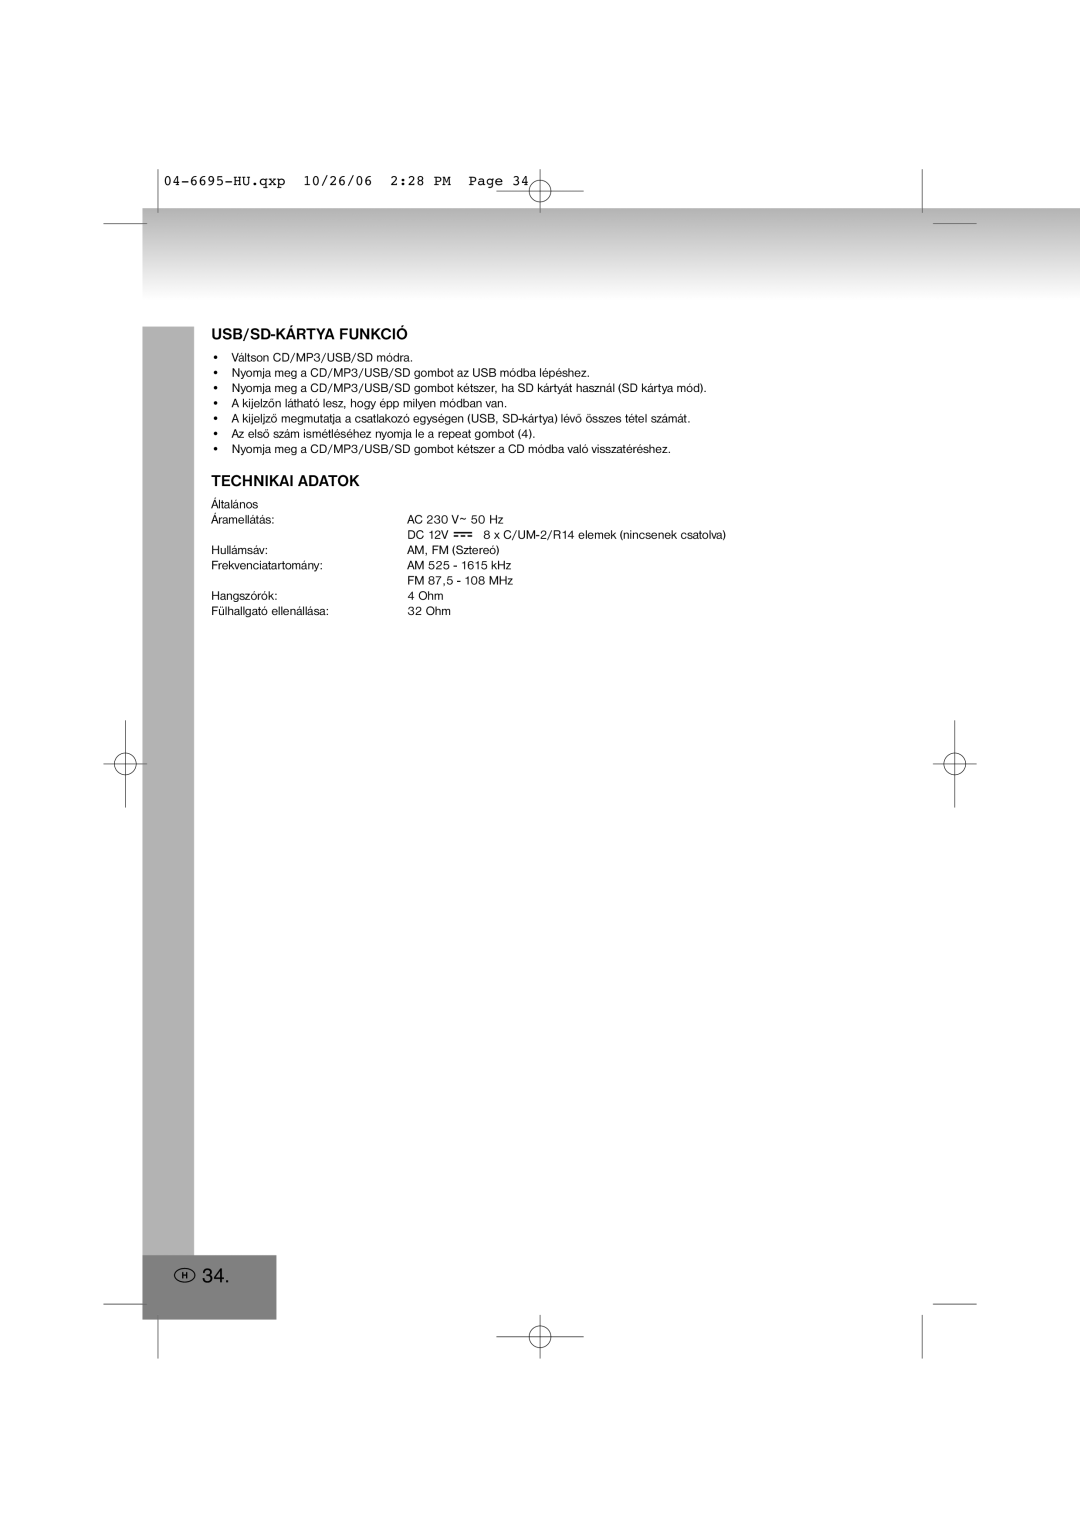 Elta manual Usb/Sd-Kártyafunkció, Technikai Adatok, 04-6695-HU.qxp10/26/06 2 28 PM Page 